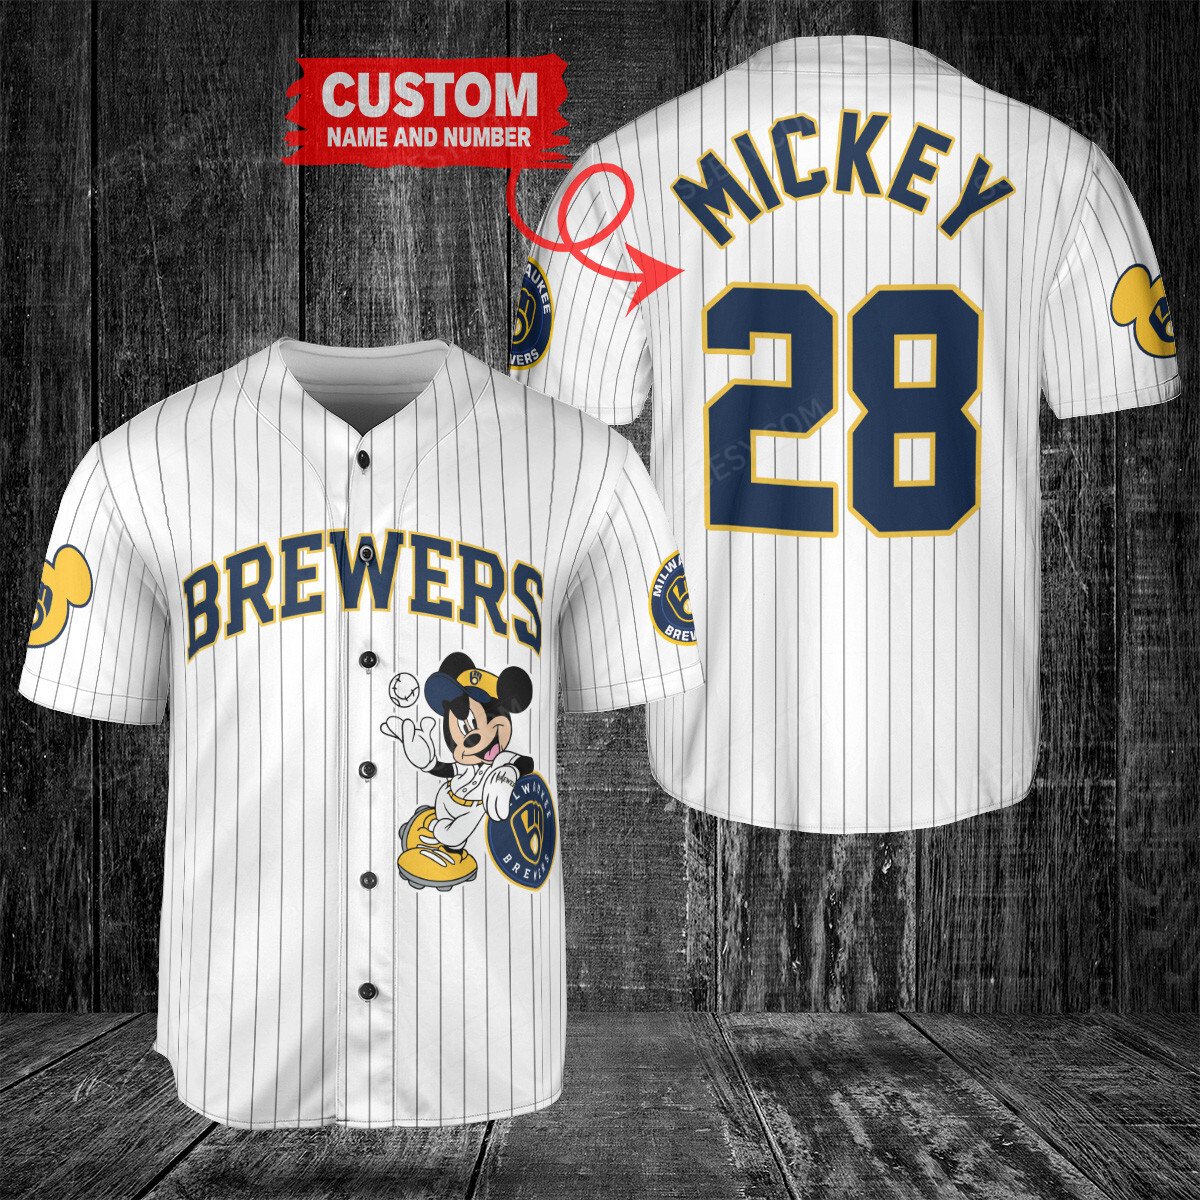 custom brewers shirt